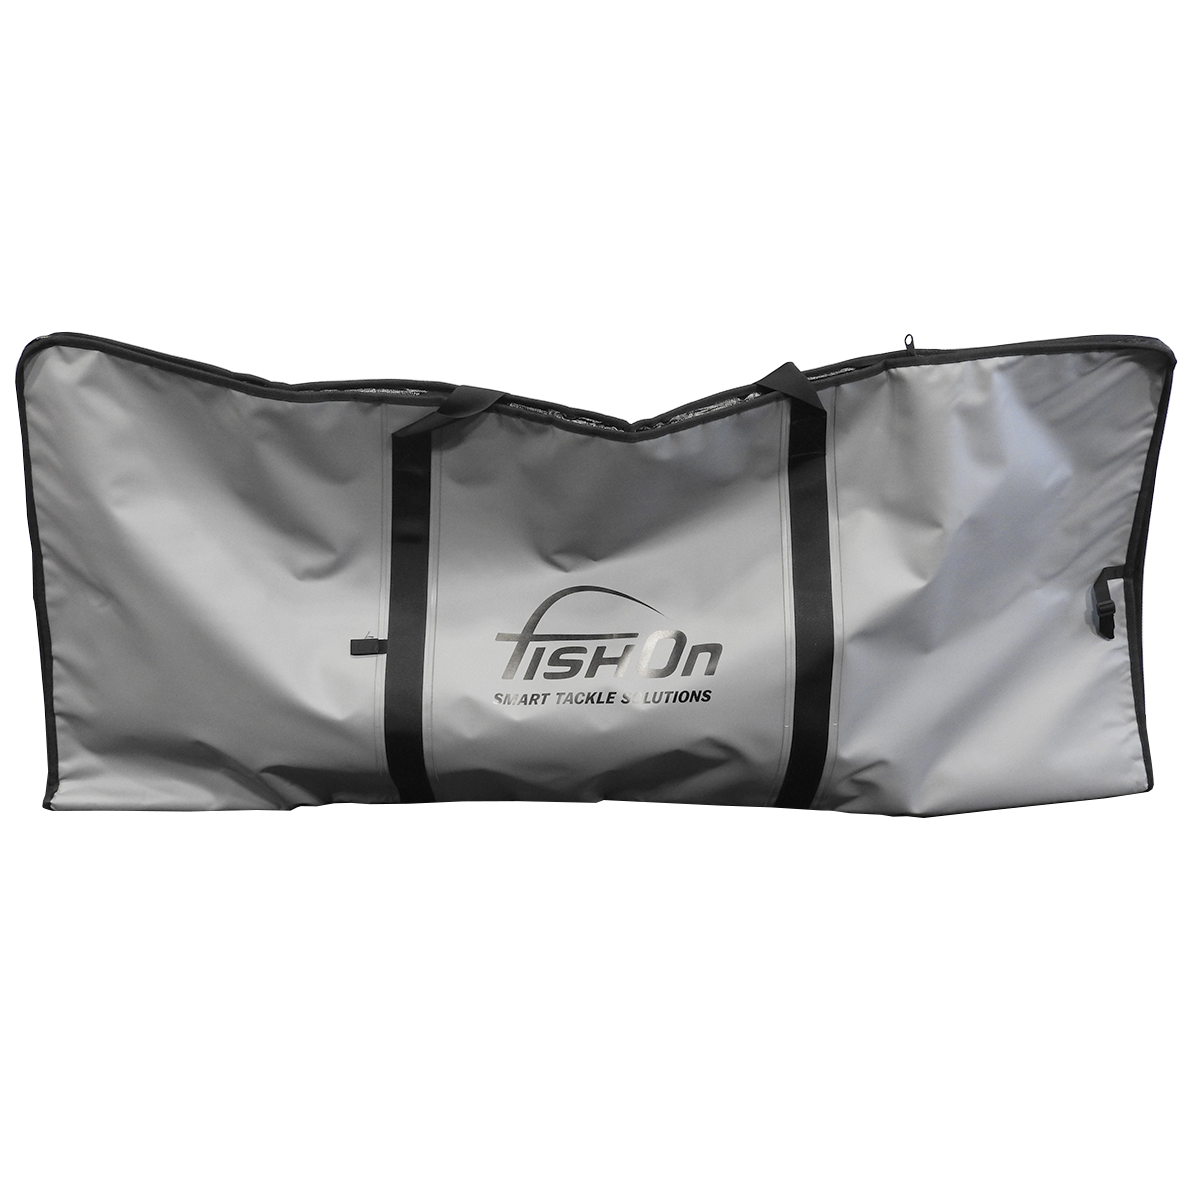 PLAT/prox tuna 150 cool fish carry bag px257150w/bag pouch-Fishing